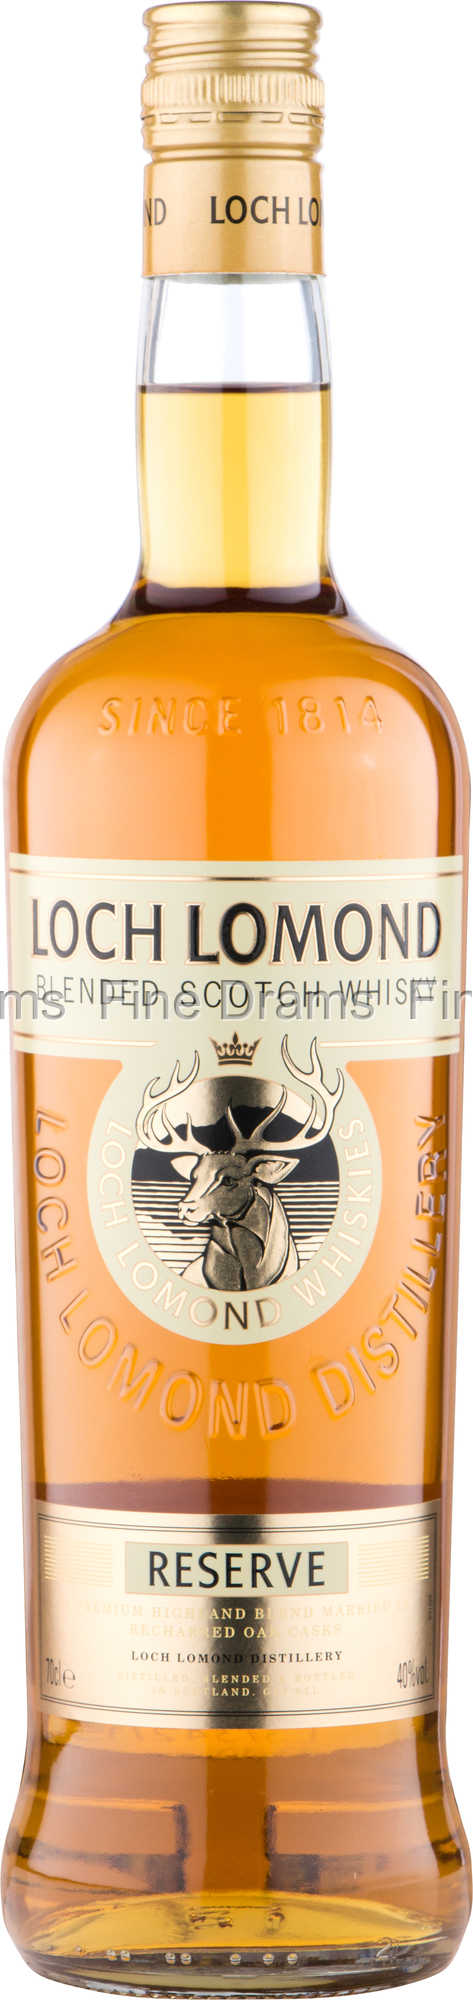 gammel Pest Kvadrant Loch Lomond Blended Reserve Scotch Whisky